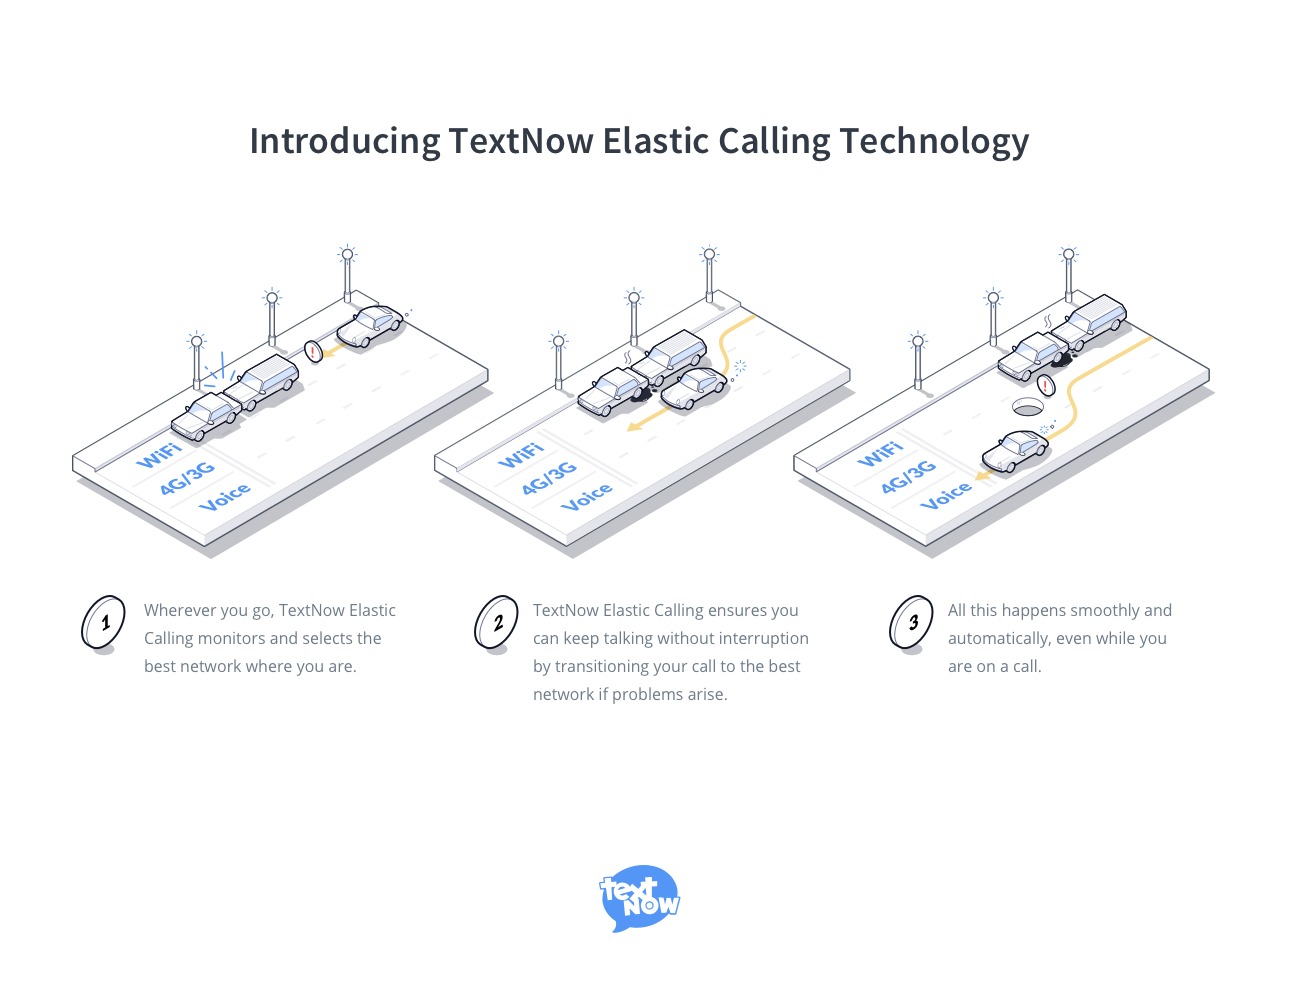 TextNow Elastic Calling